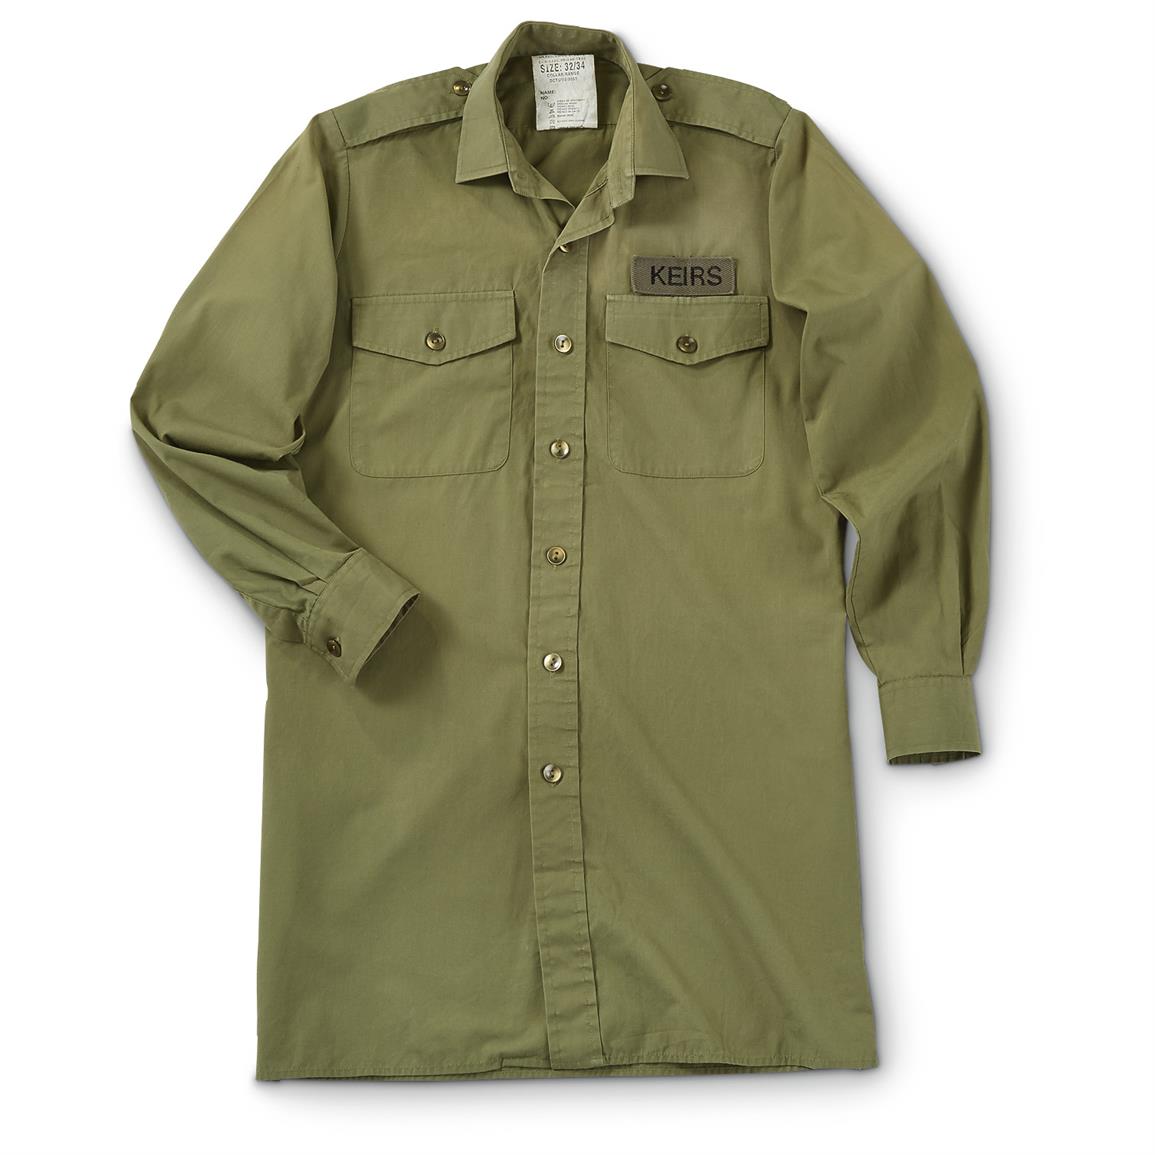 British Military Surplus Long-Sleeve Field Shirts, 3 Pack, Used